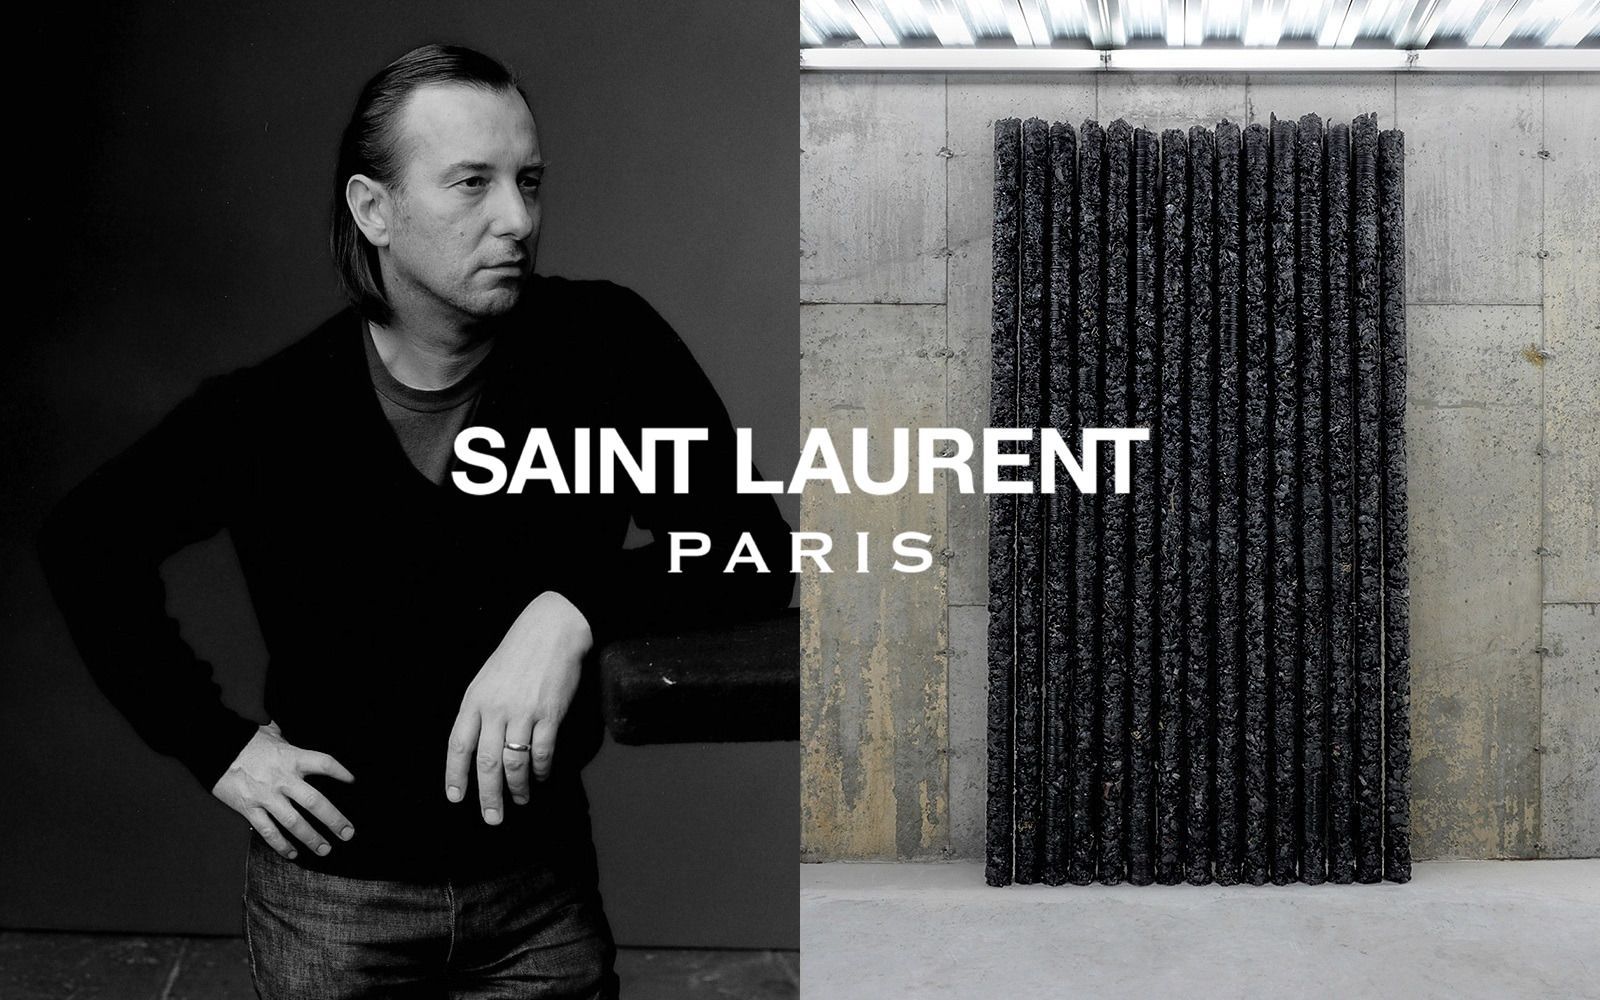 Helmut Lang is making art with Saint Laurent